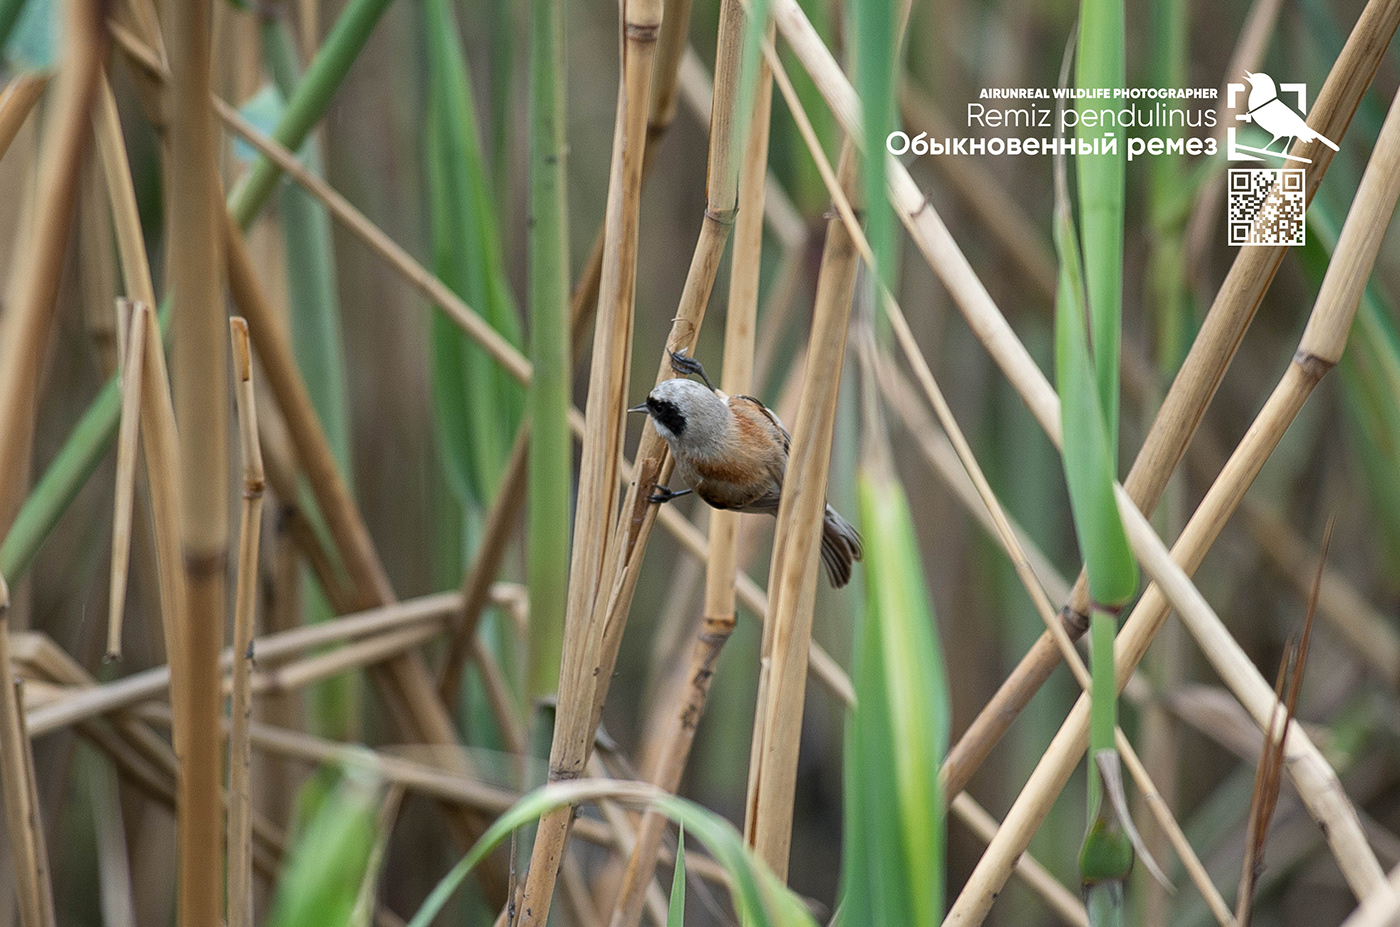 Remiz pendulinus bird birds birdswatching volgograd Russia wildlife Eurasian penduline tit TIT